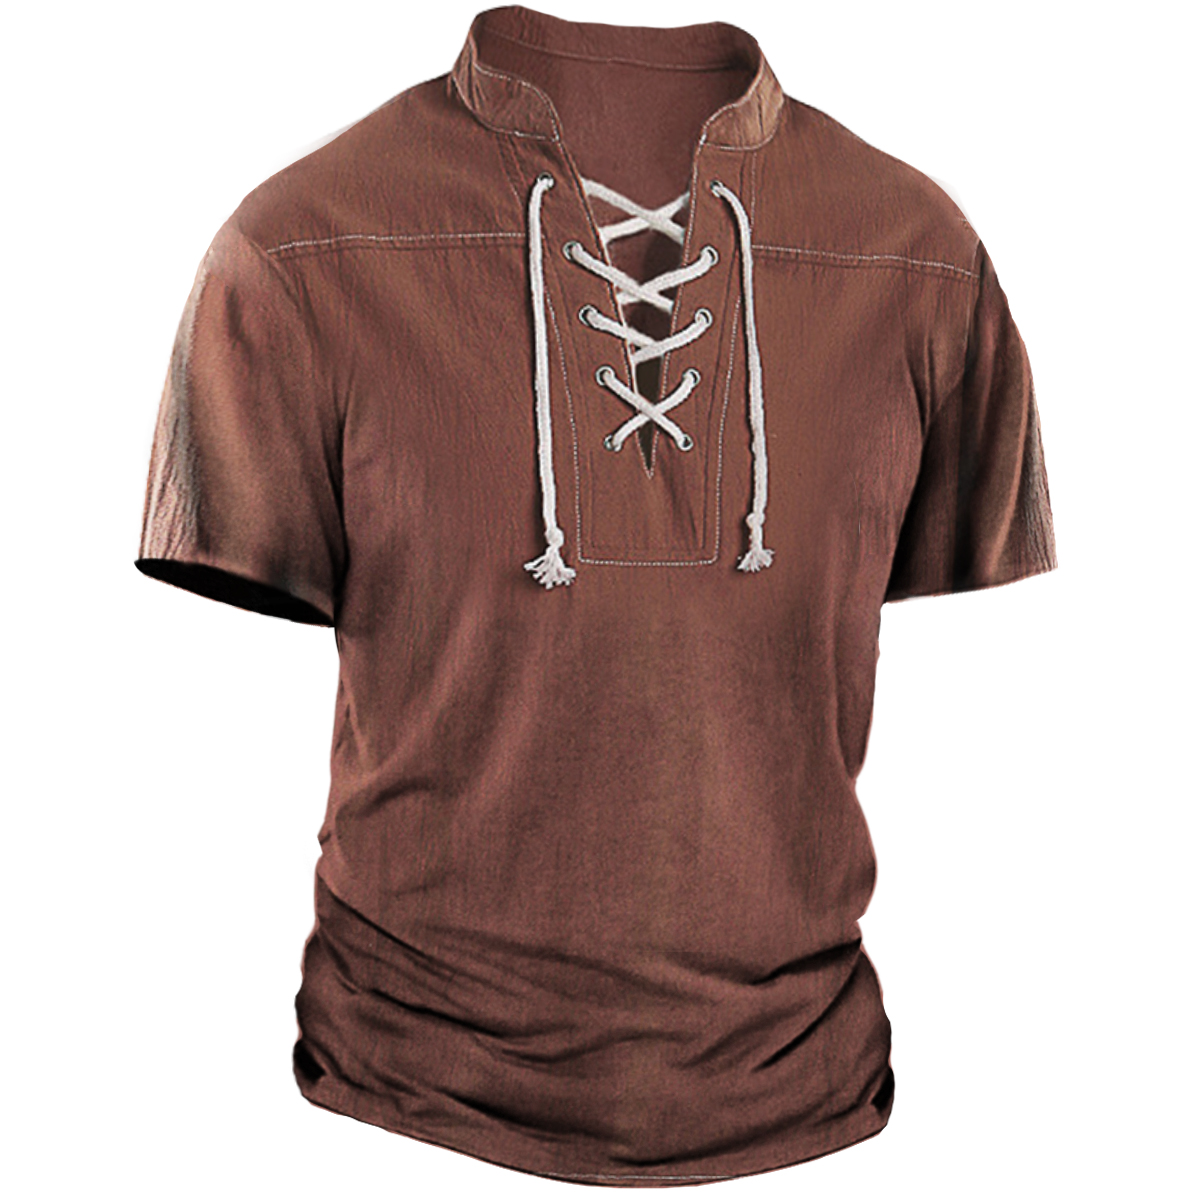 Men's Vintage Drawstring Short Sleeve Chic T-shirt